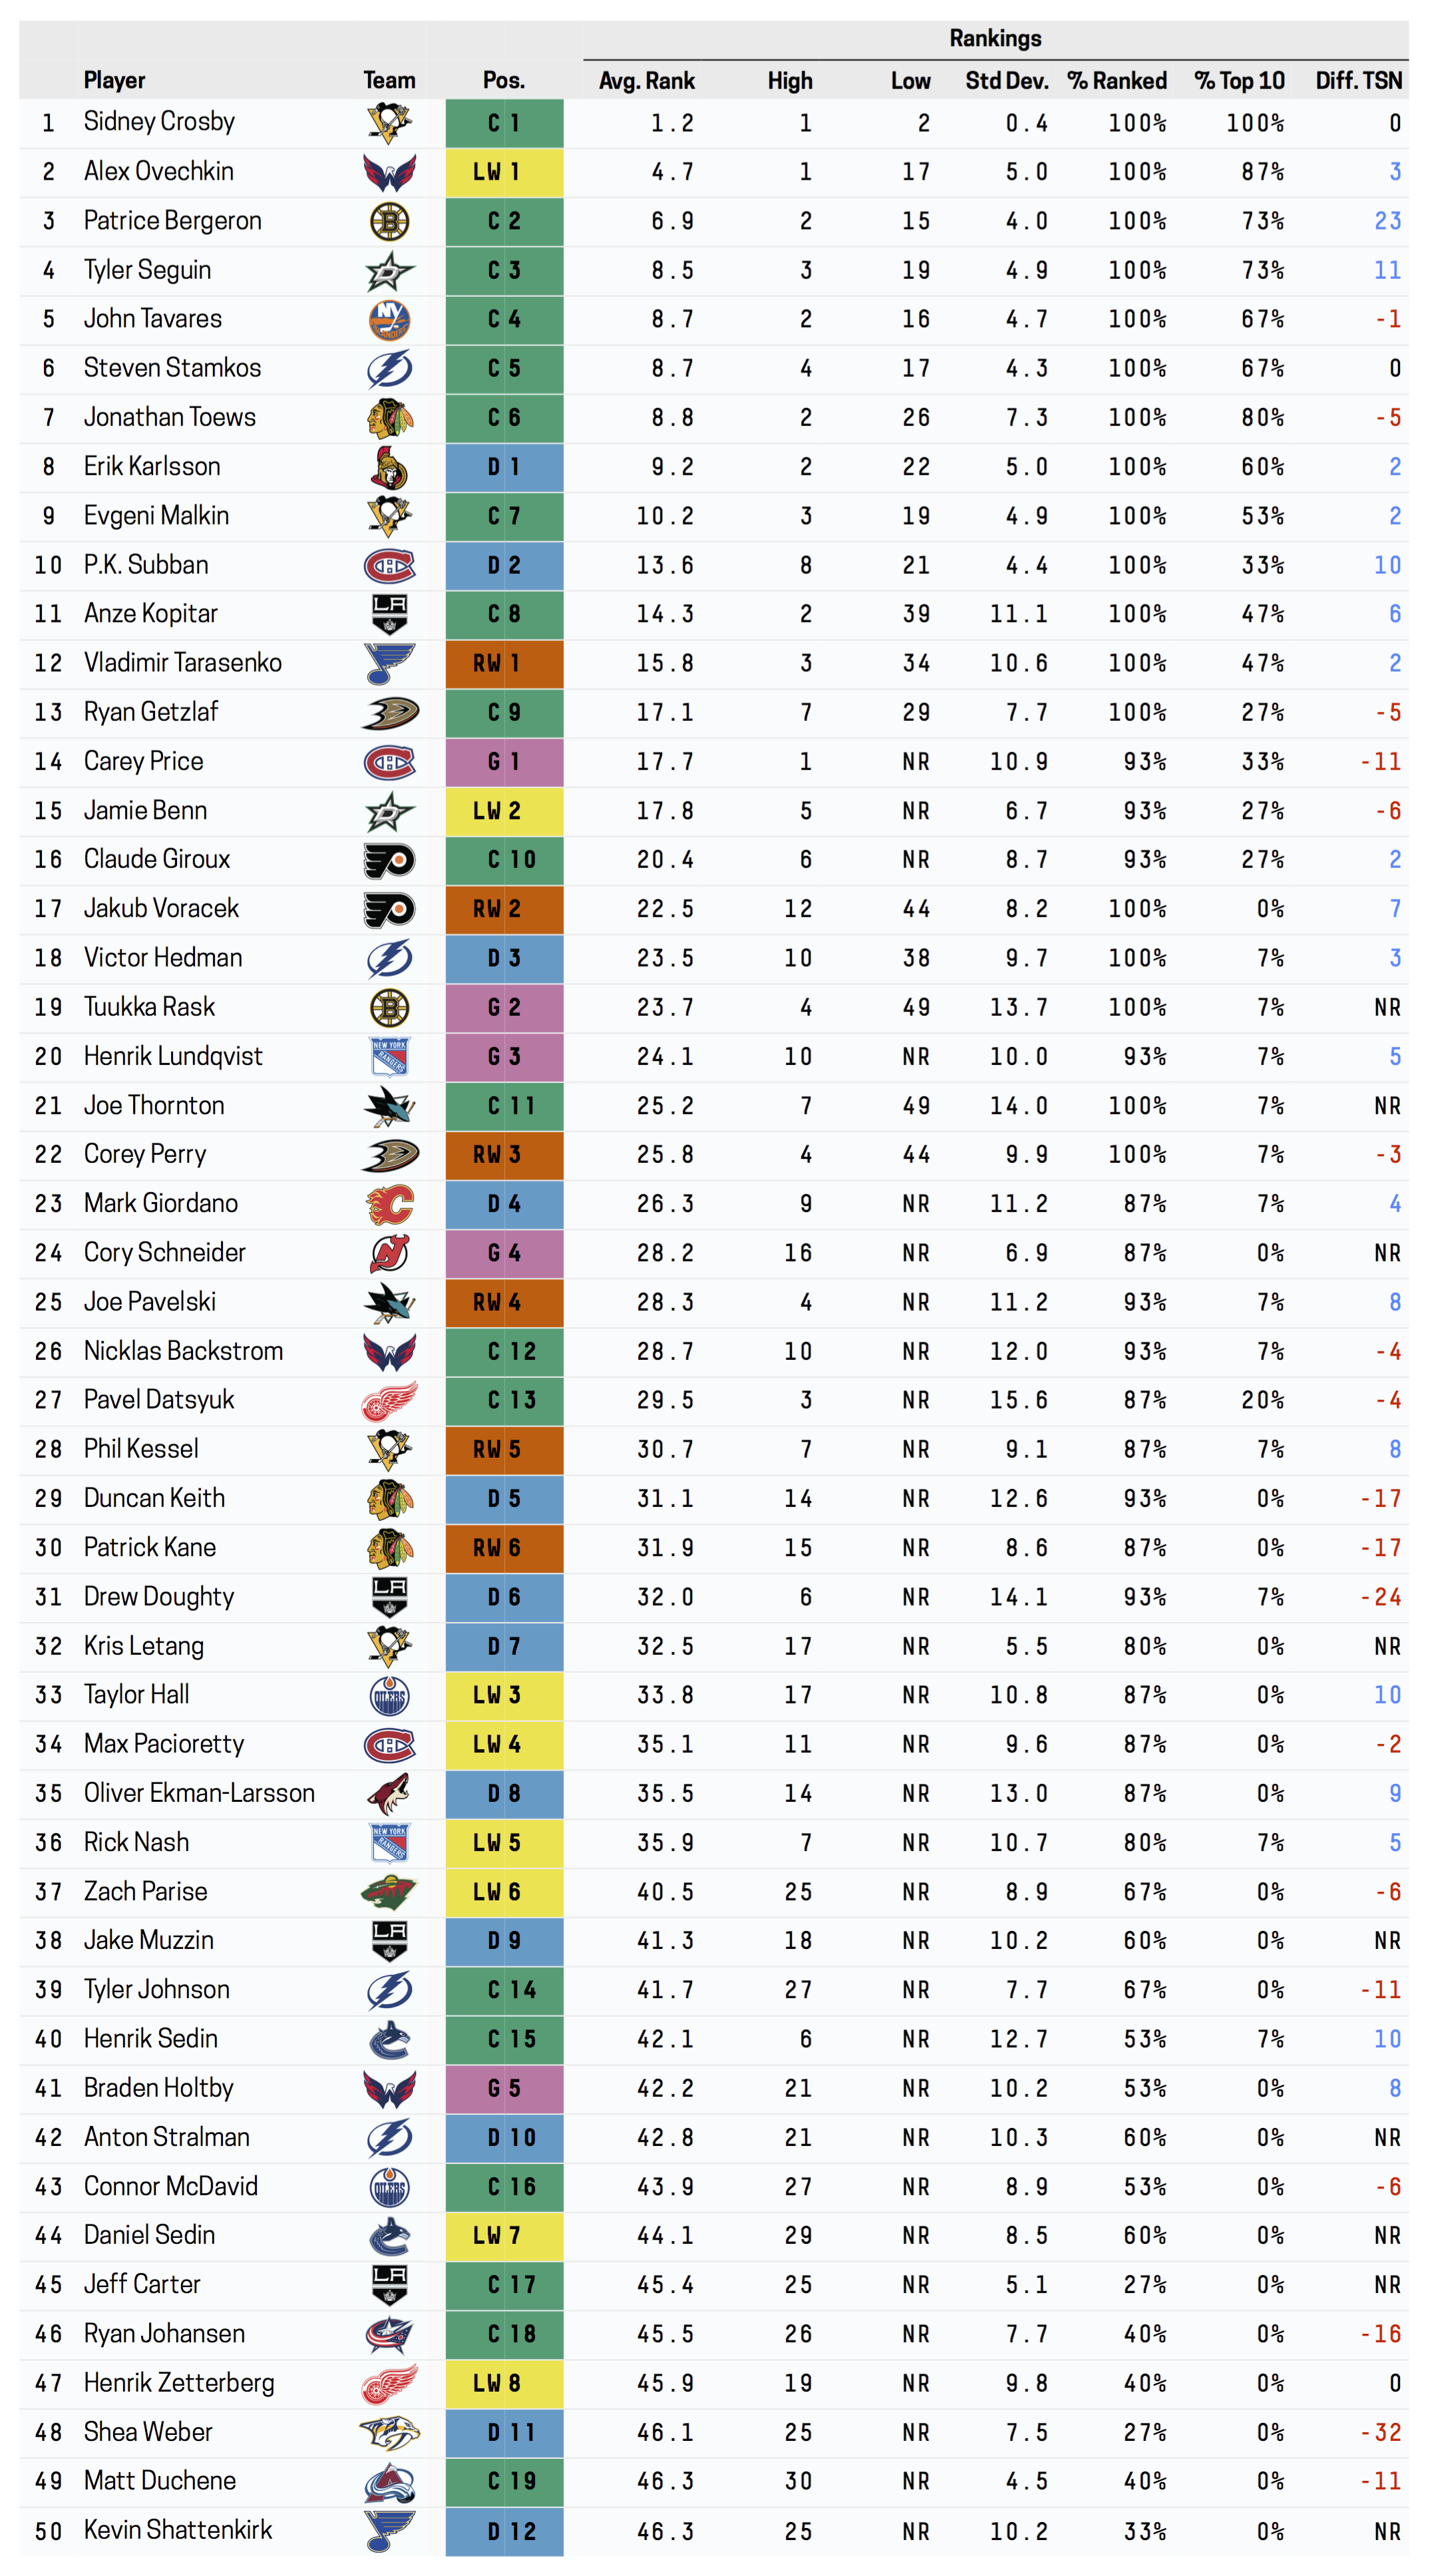 Hockey Graphs Top 50 NHL Players 